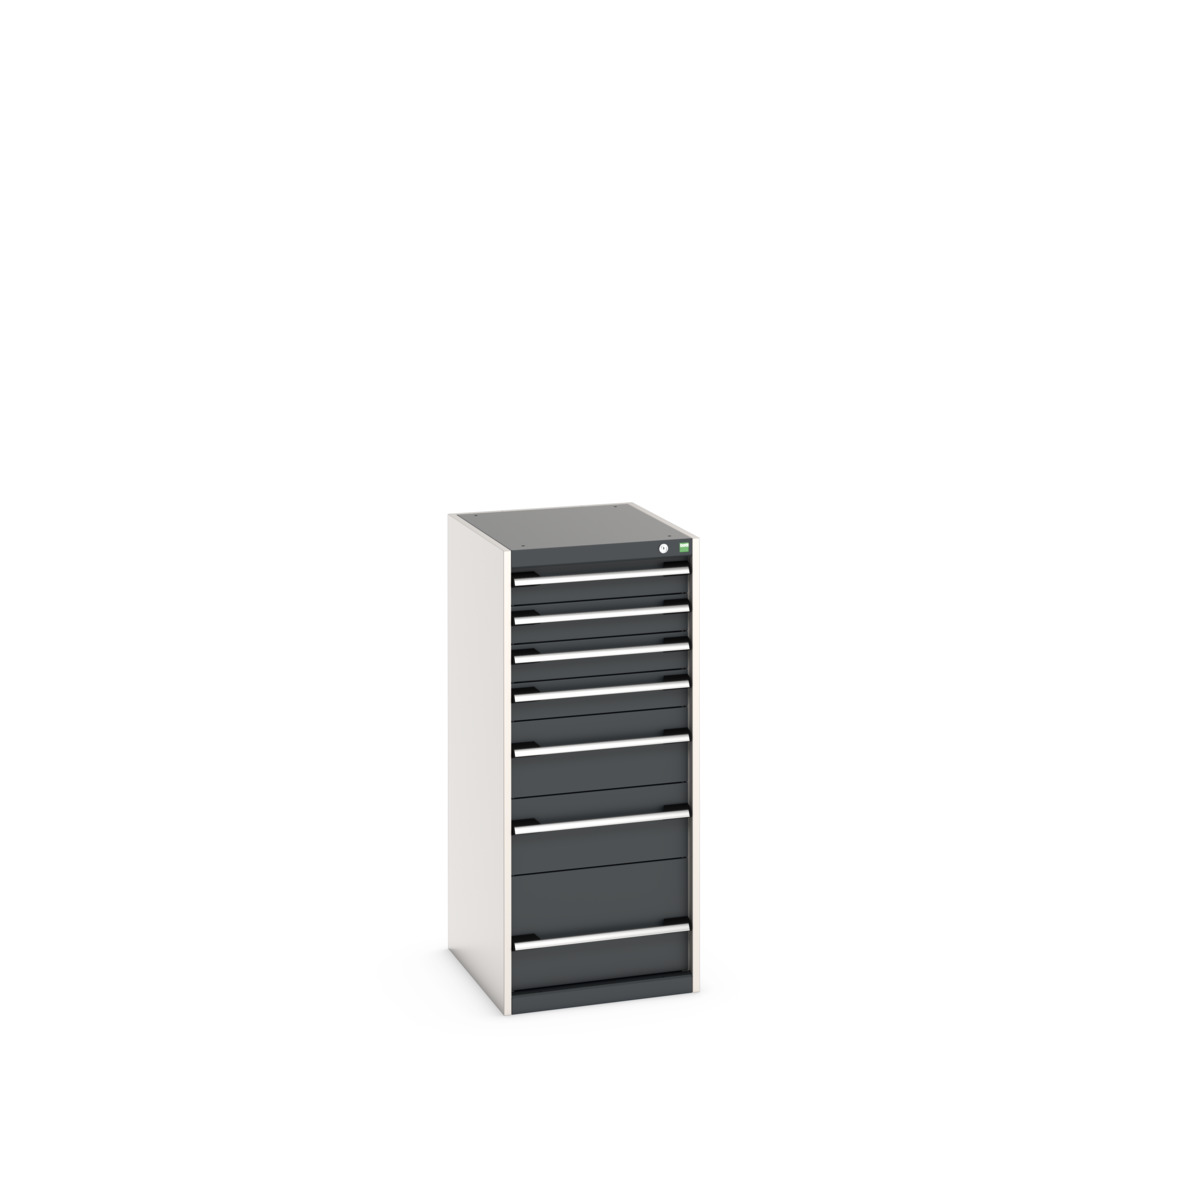 40018067. - cubio drawer cabinet